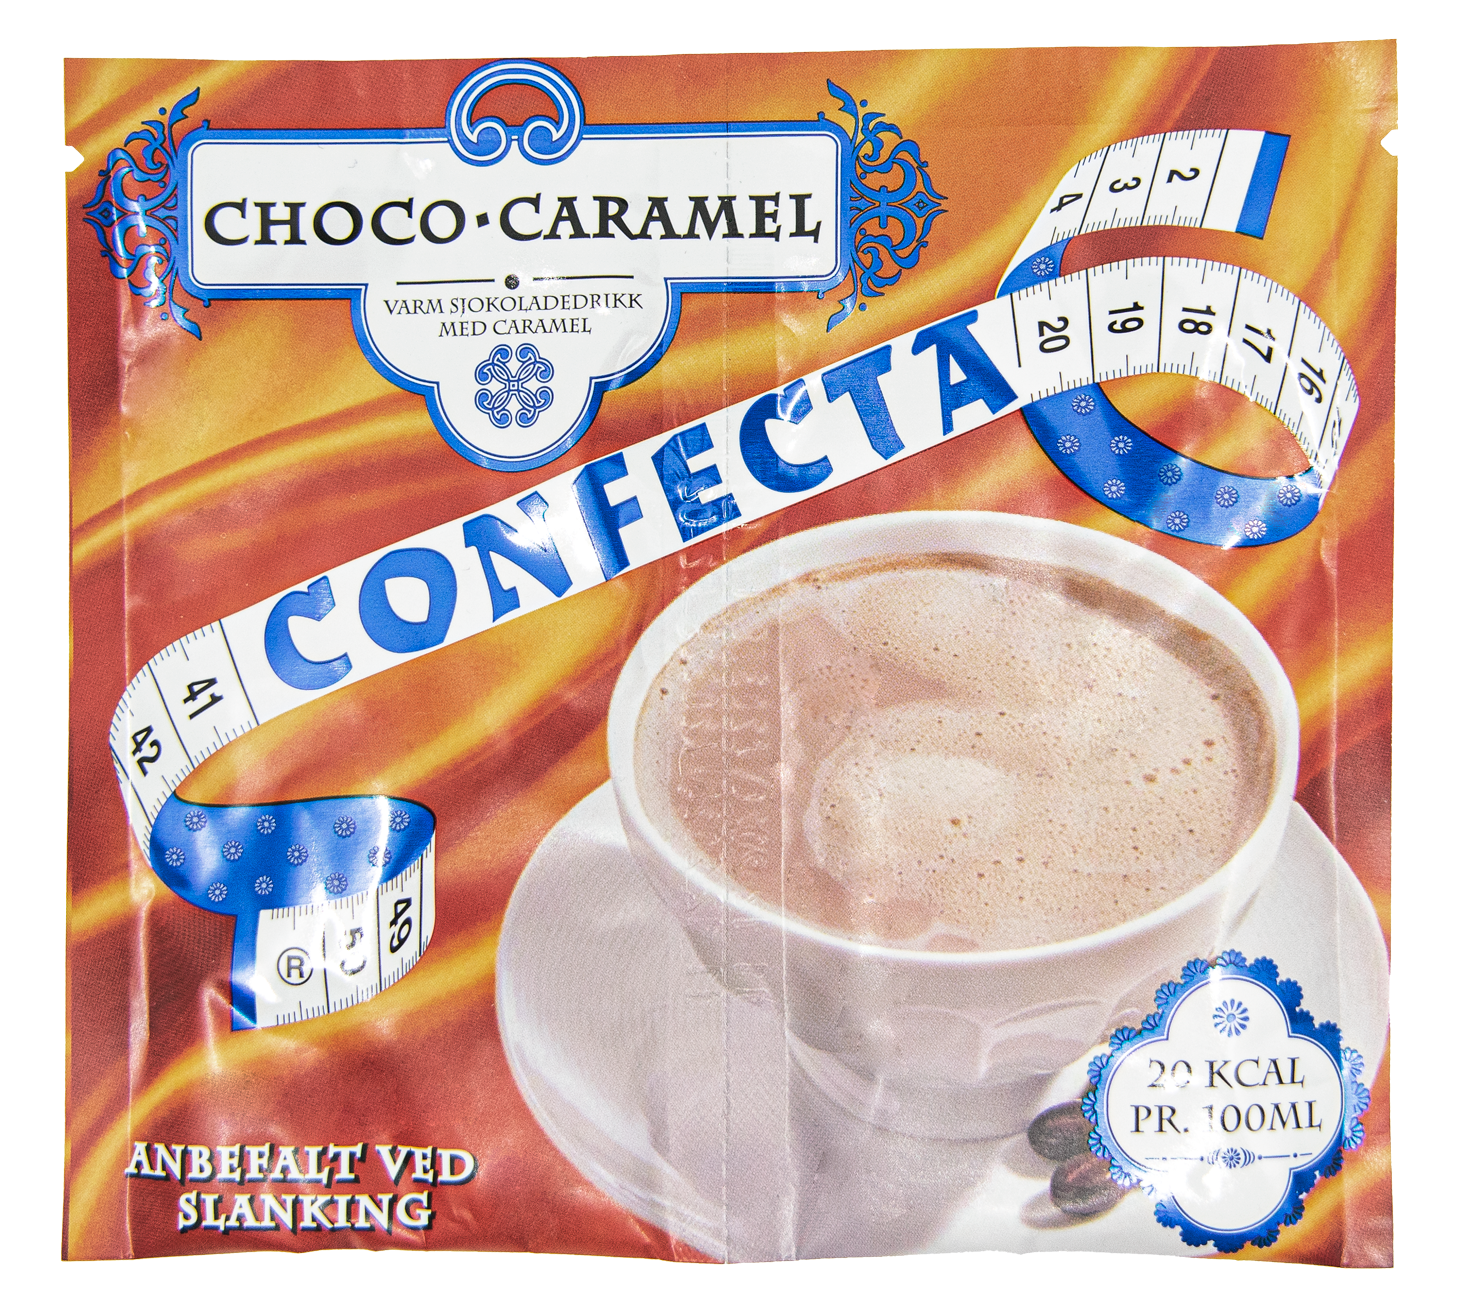 Choco caramel confecta